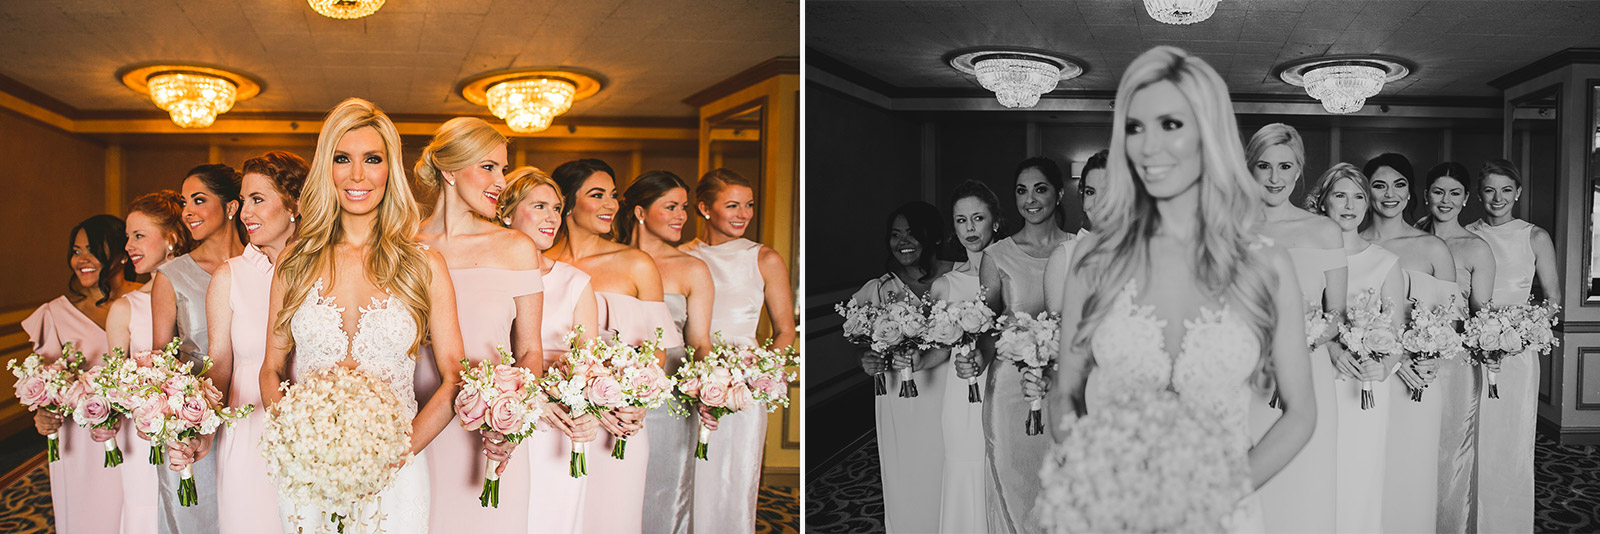 20 bride and bridesmaids - Kayla + Terry // Drake Hotel Chicago Wedding Photos